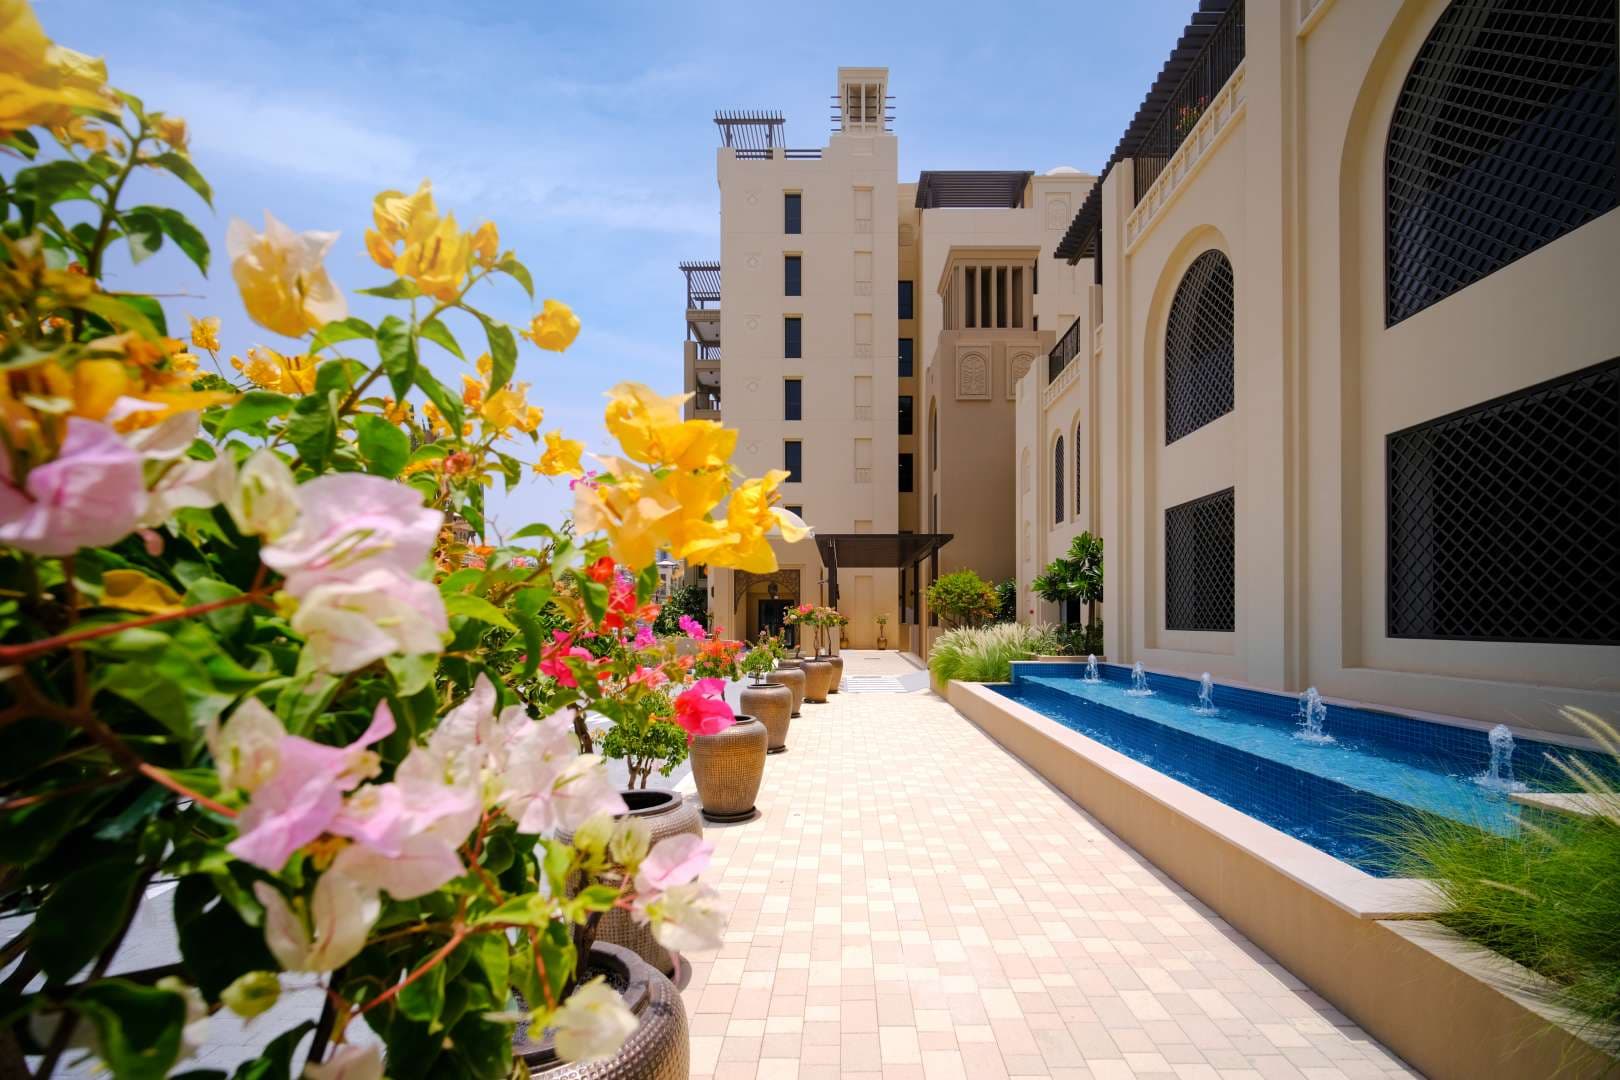 4 Bedroom Apartment For Sale Madinat Jumeirah Living Lp09815 14a0c2a663658d00.jpg